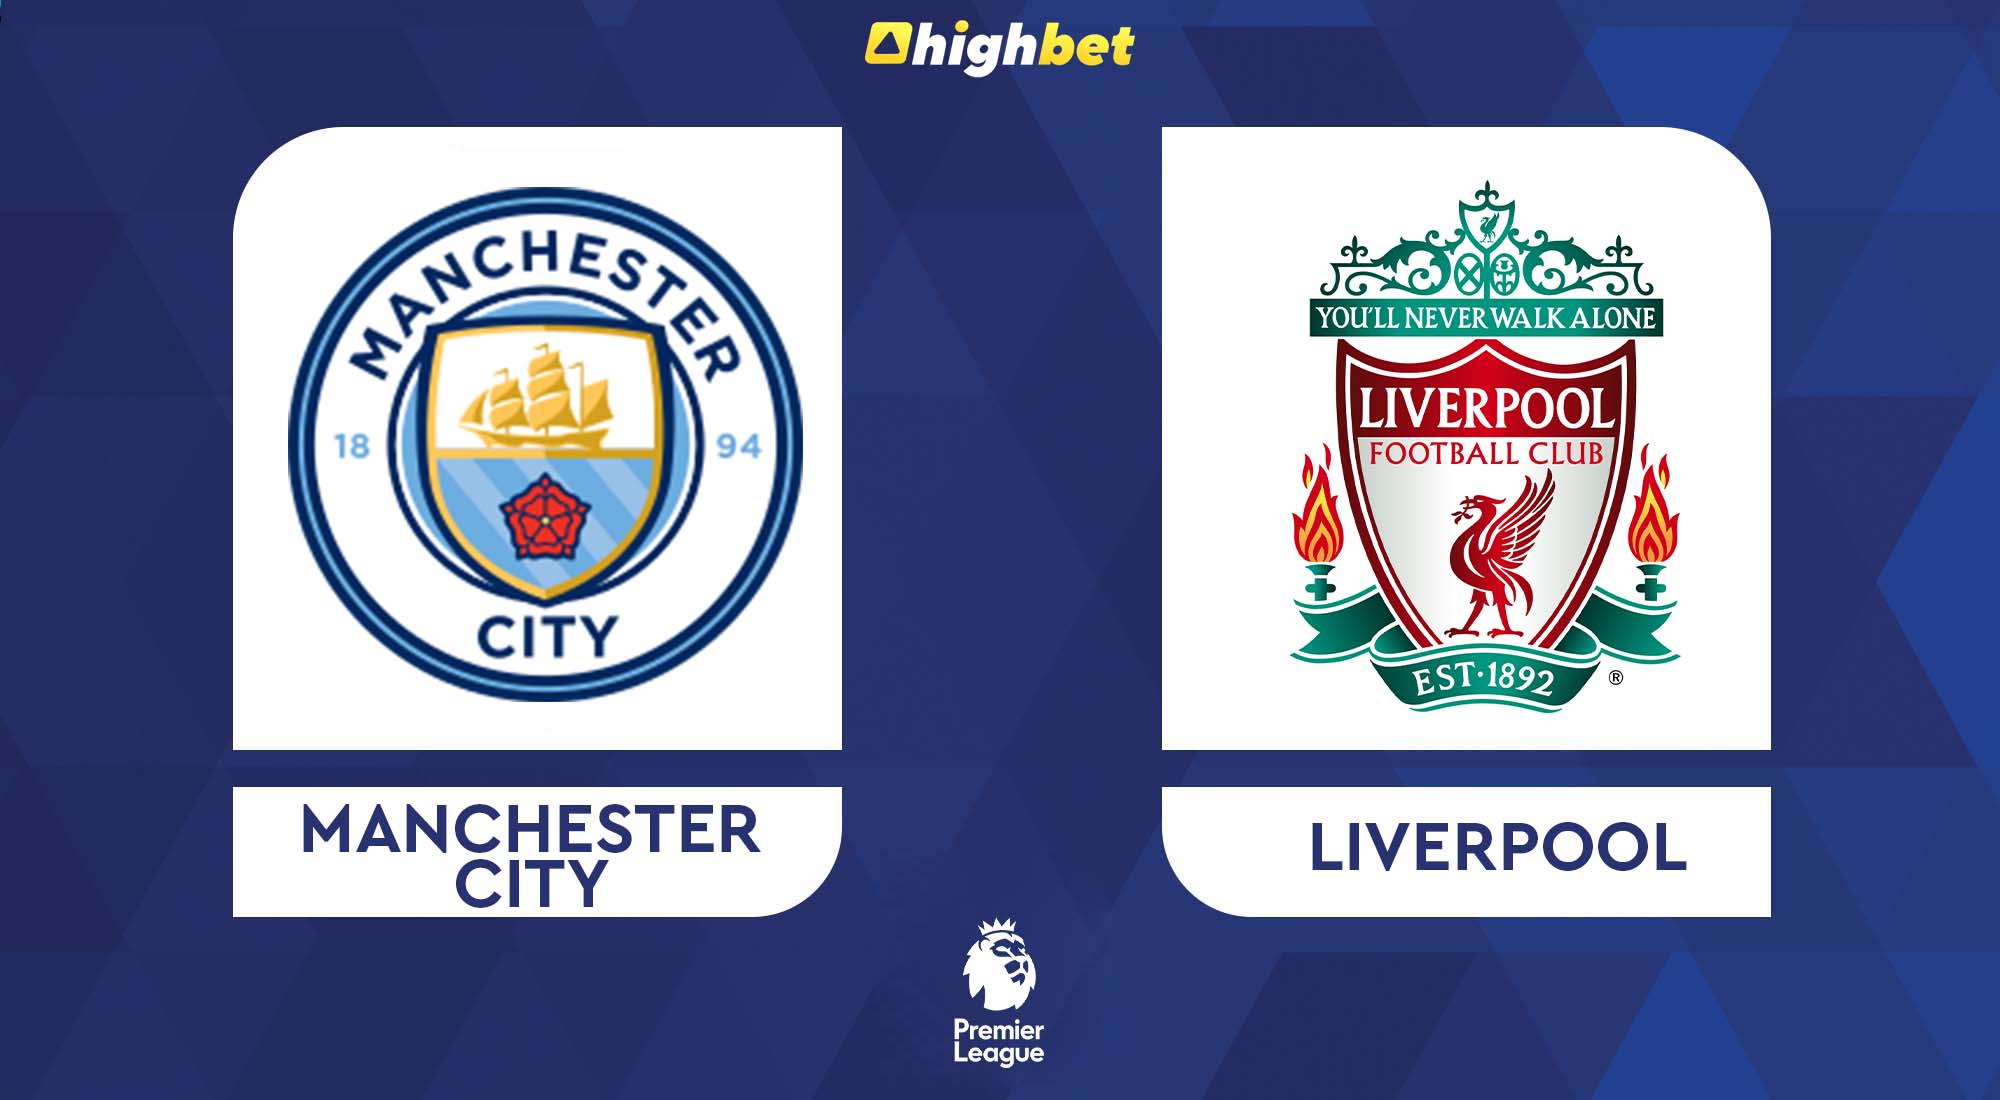 Manchester City vs Liverpool - highbet Premier League Pre-Match Analysis